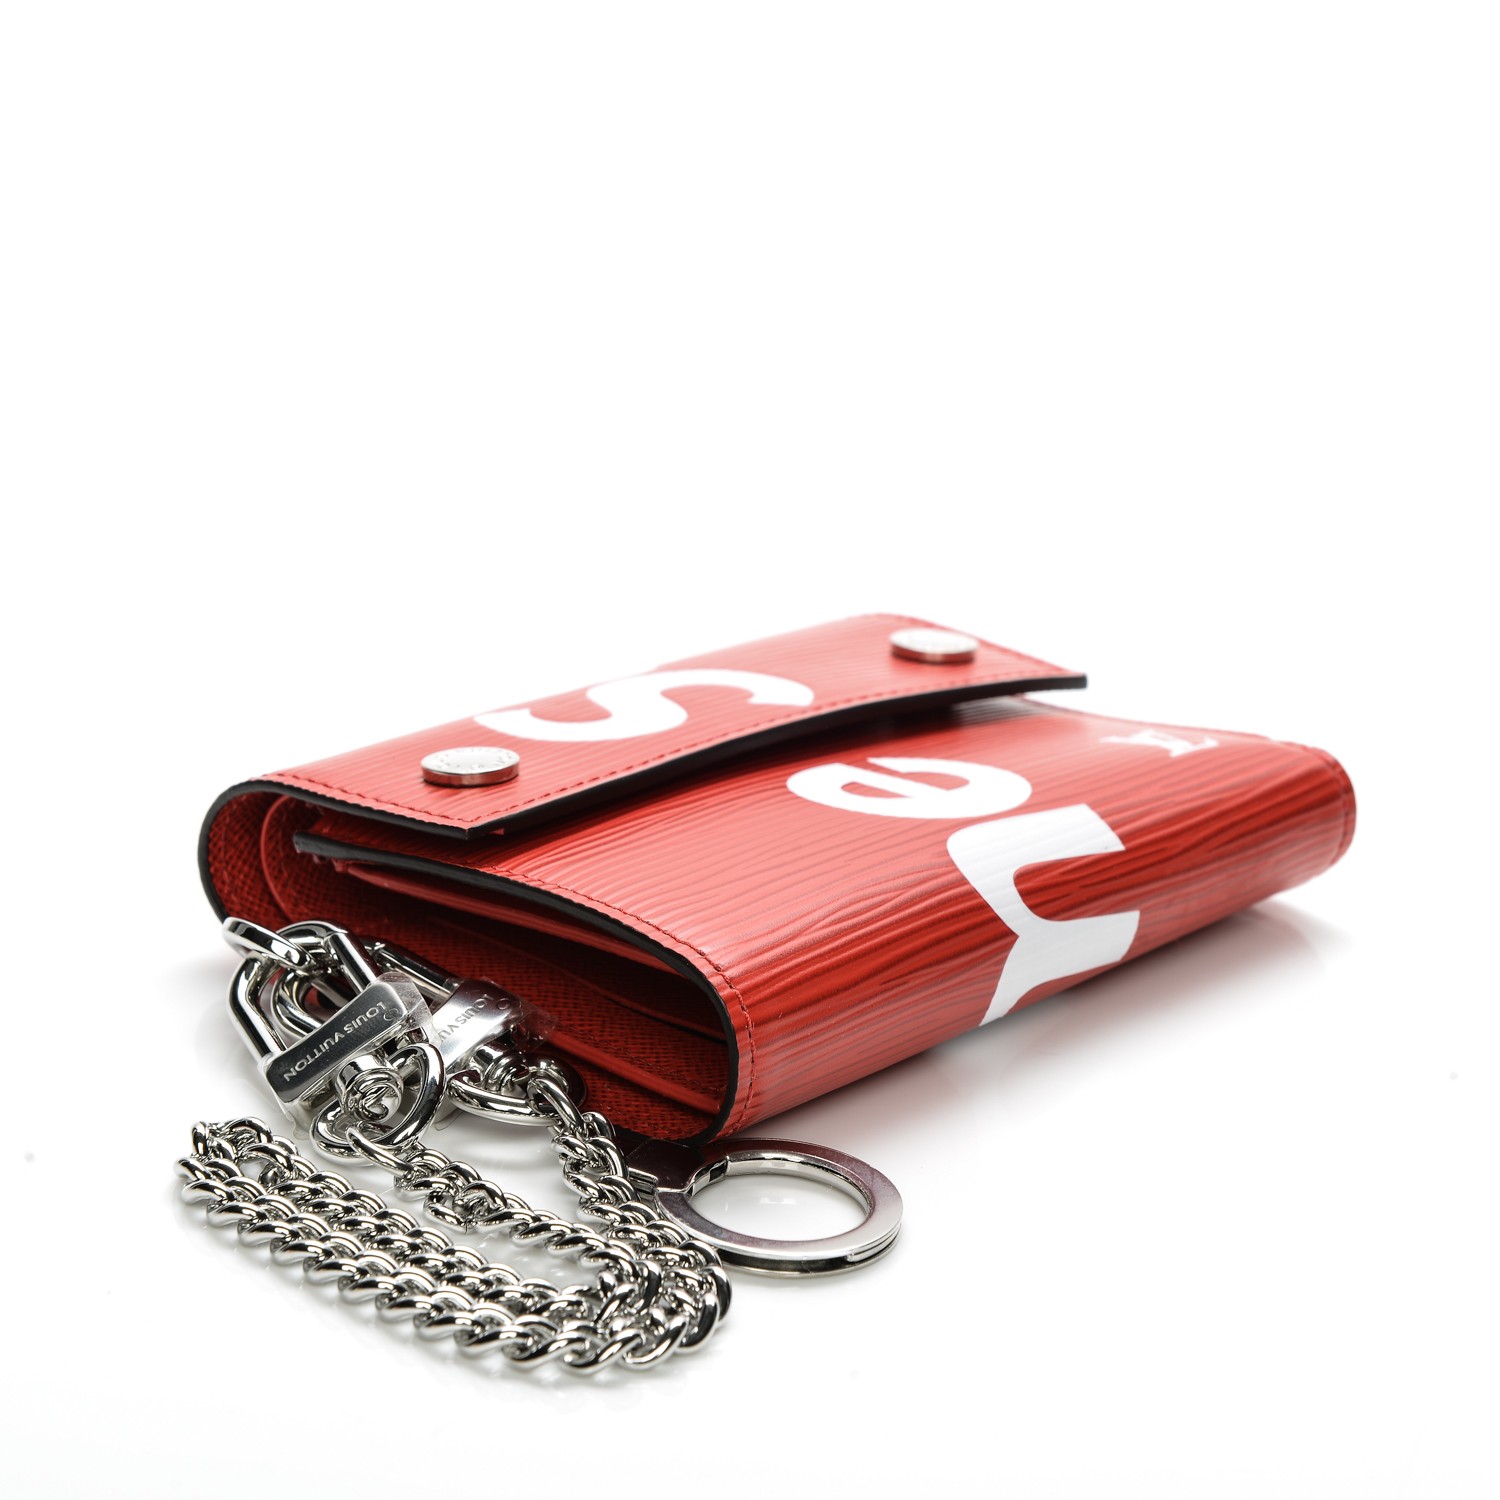 supreme chain wallet epi red